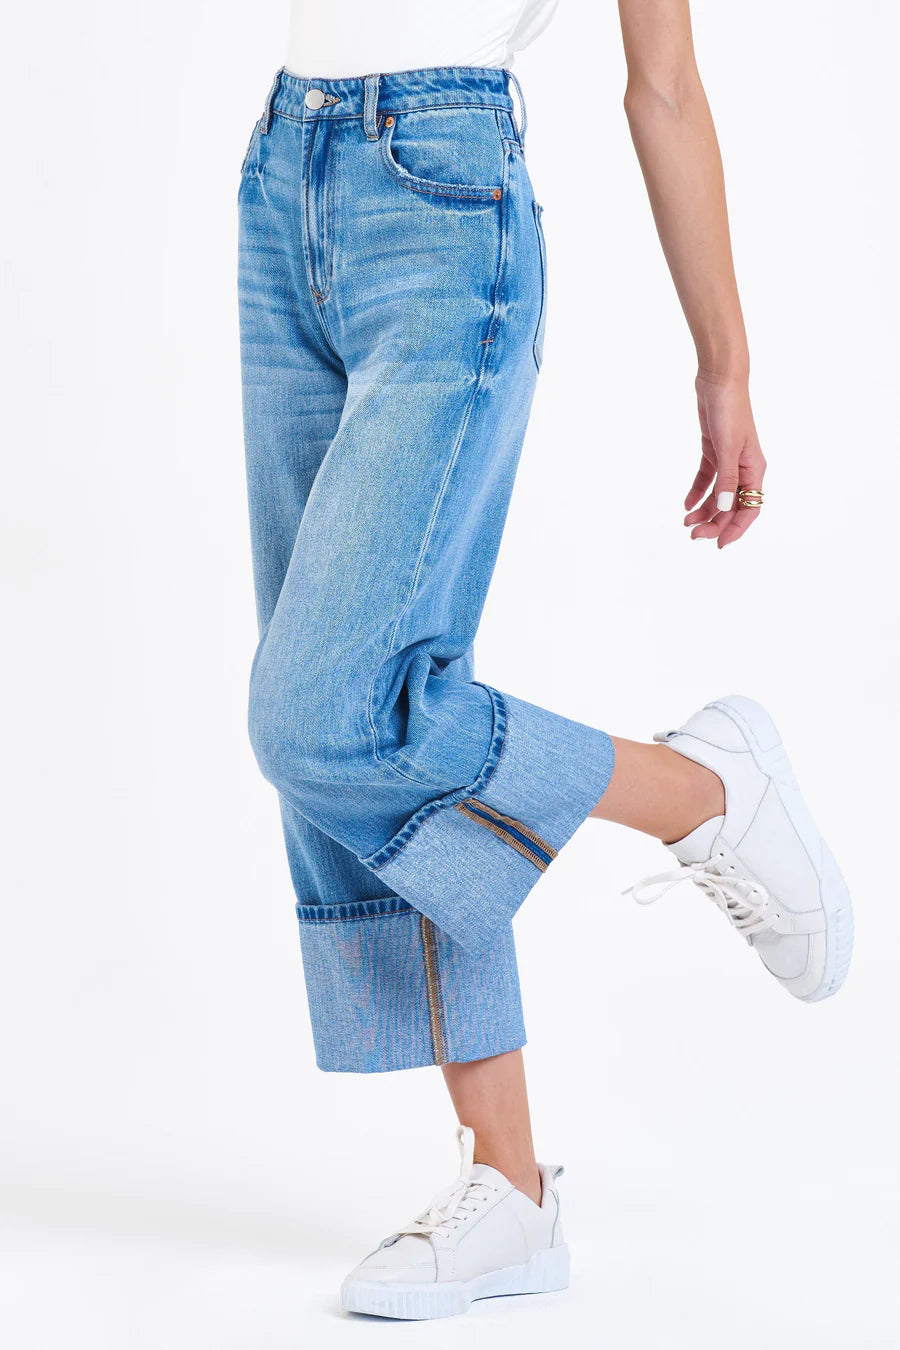 Polly High Rise Cuffed Leg Jeans - Venture Wash